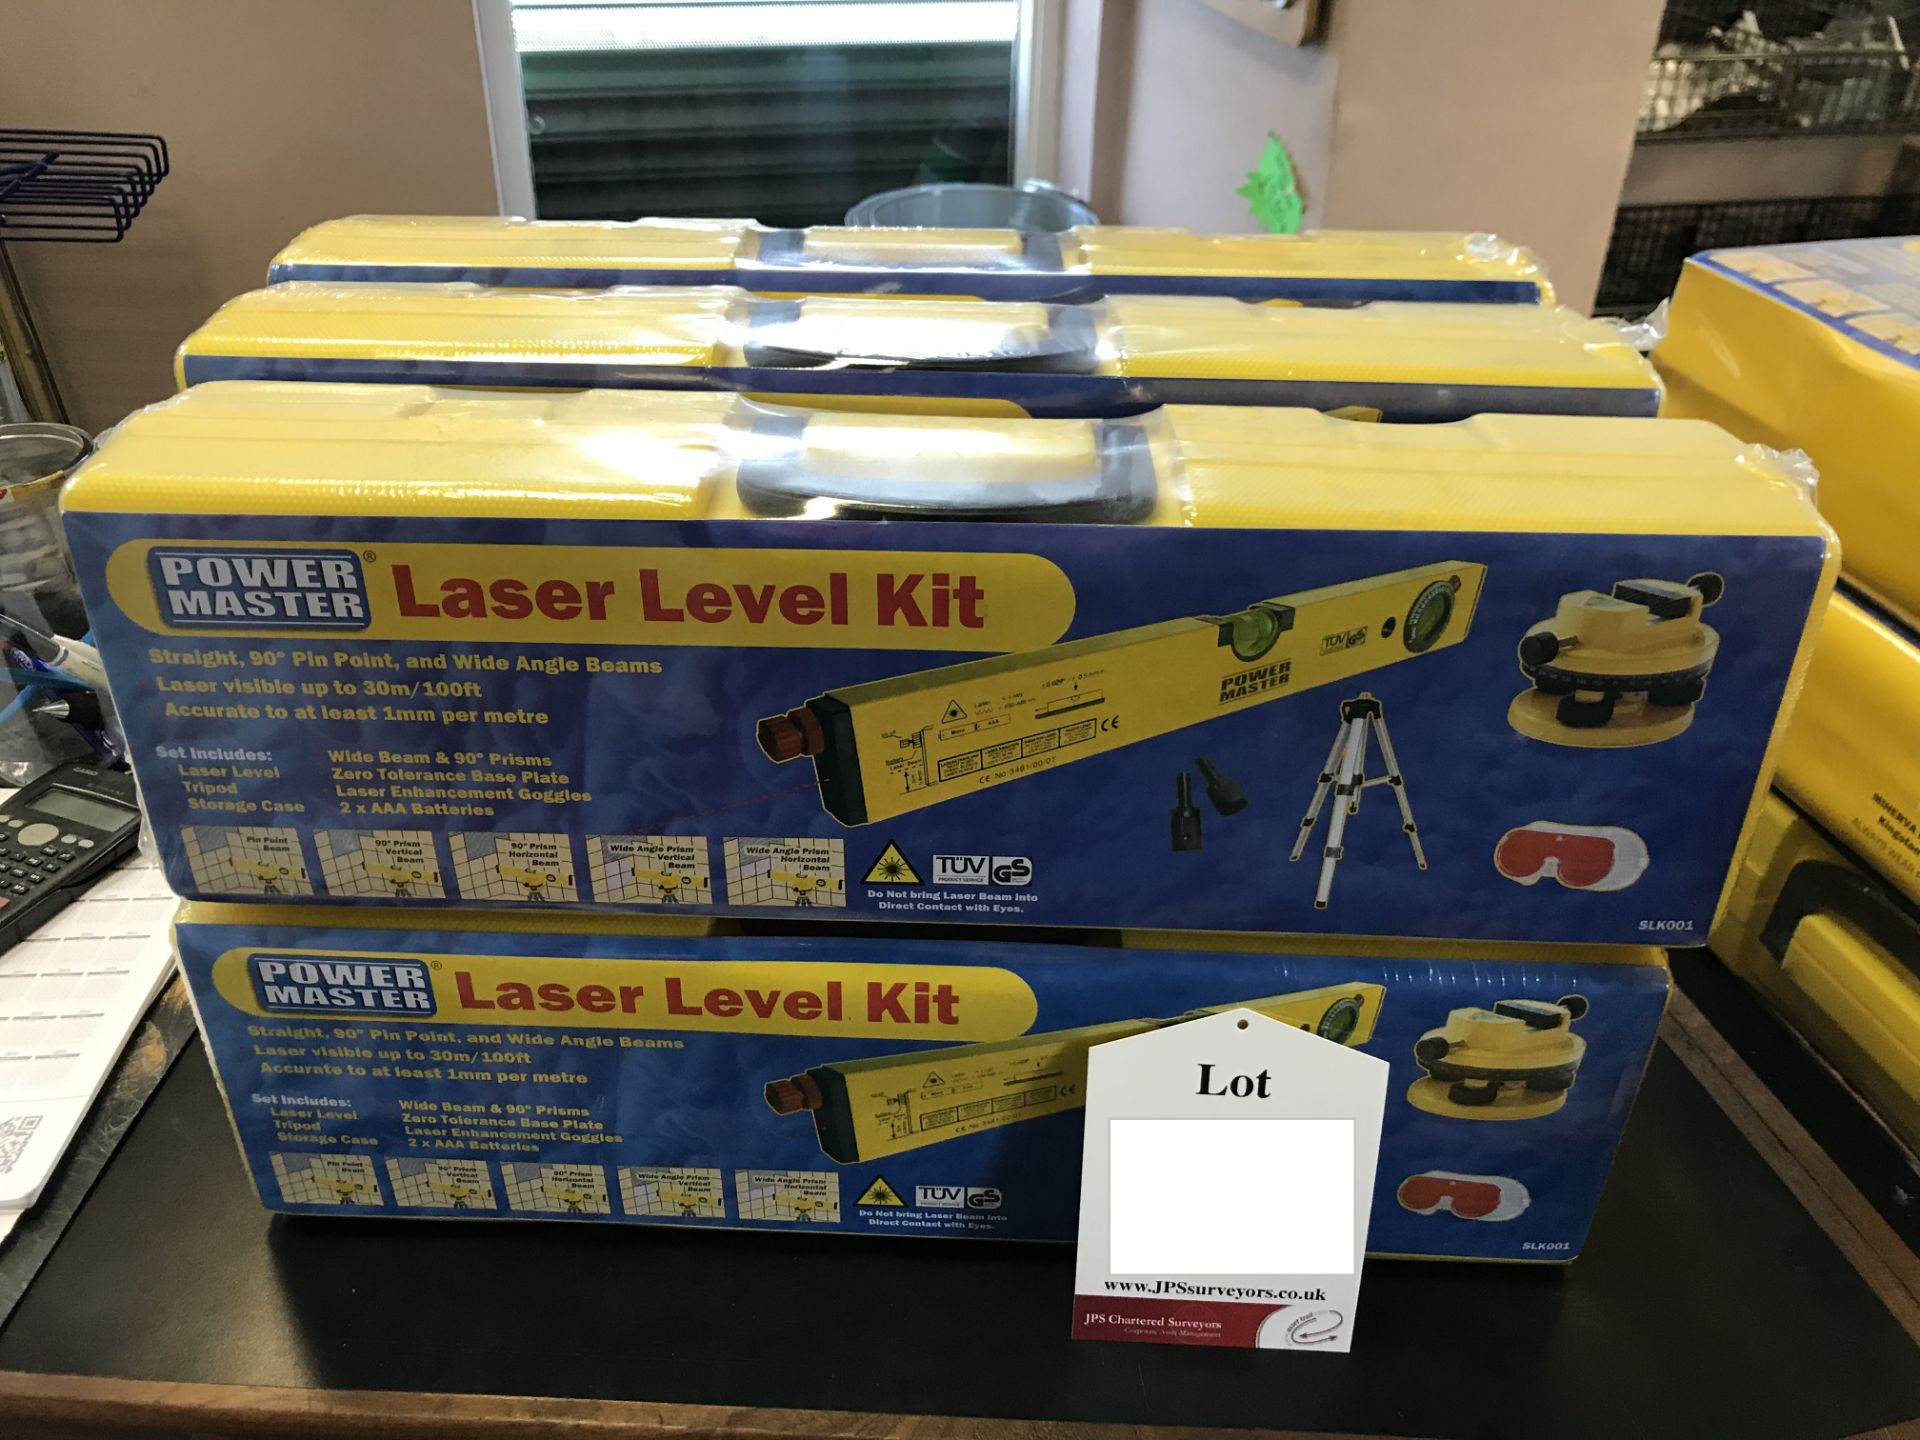 6 x Powermaster SLK001 Laser Level Kits